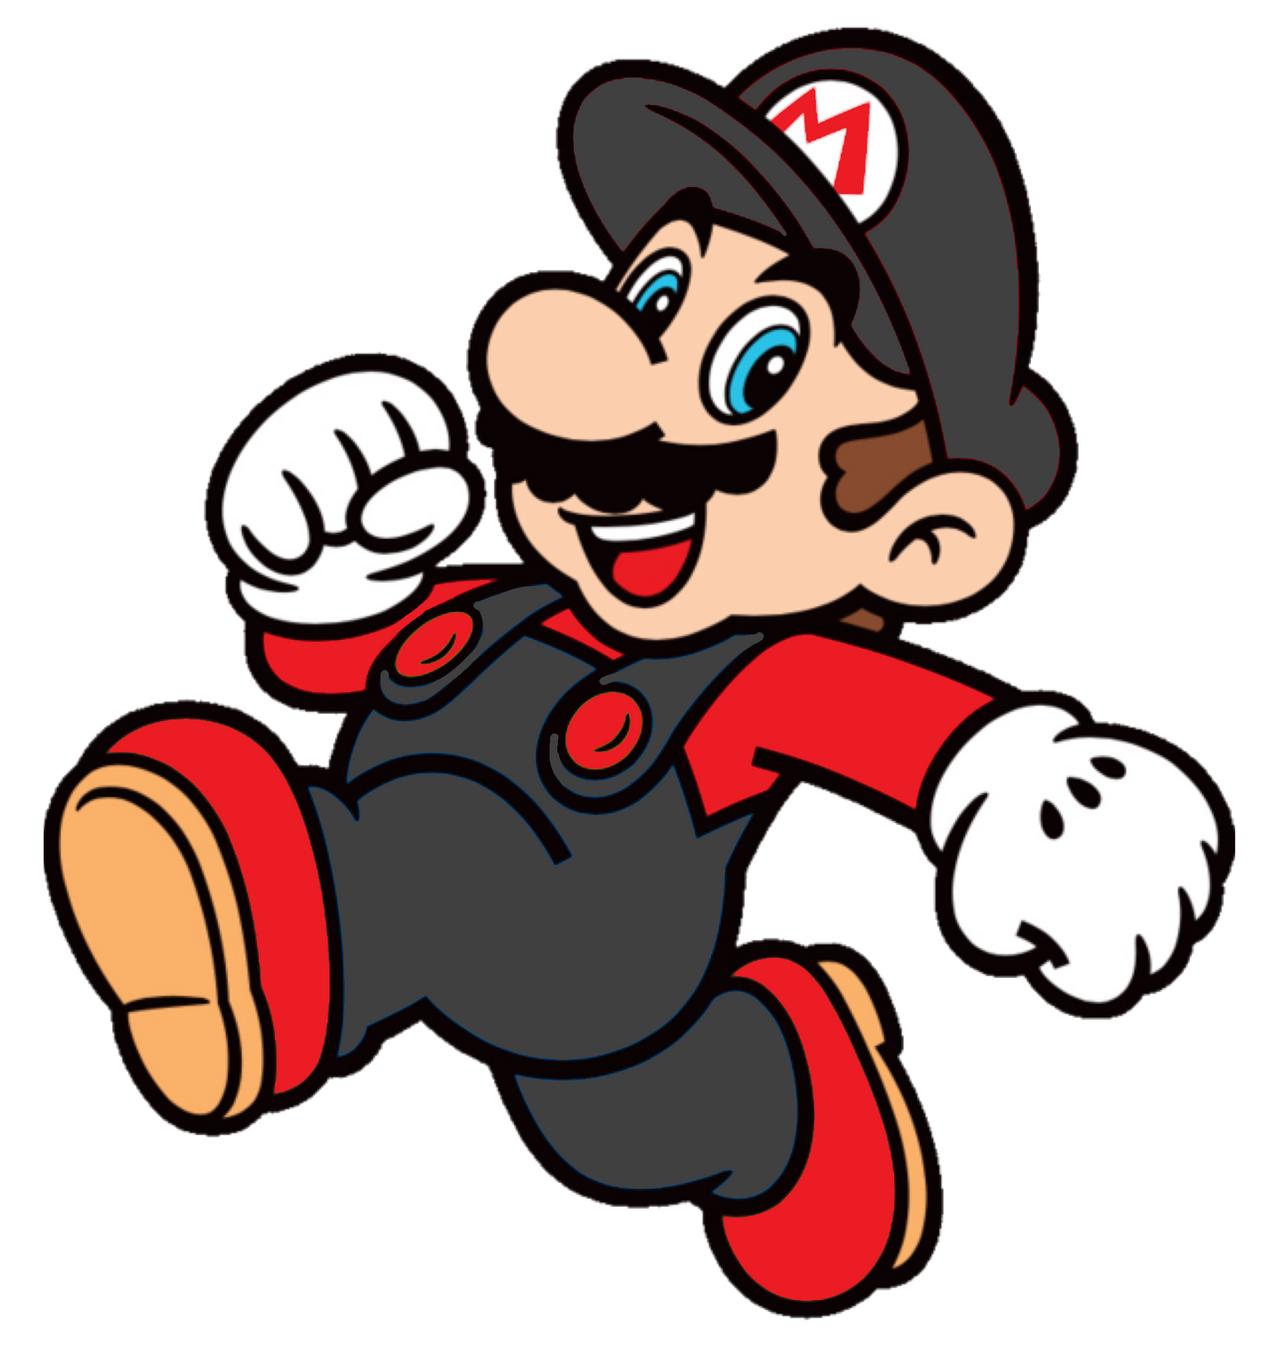 Super Mario: Bowser Jr. 2D by Joshuat1306 on DeviantArt